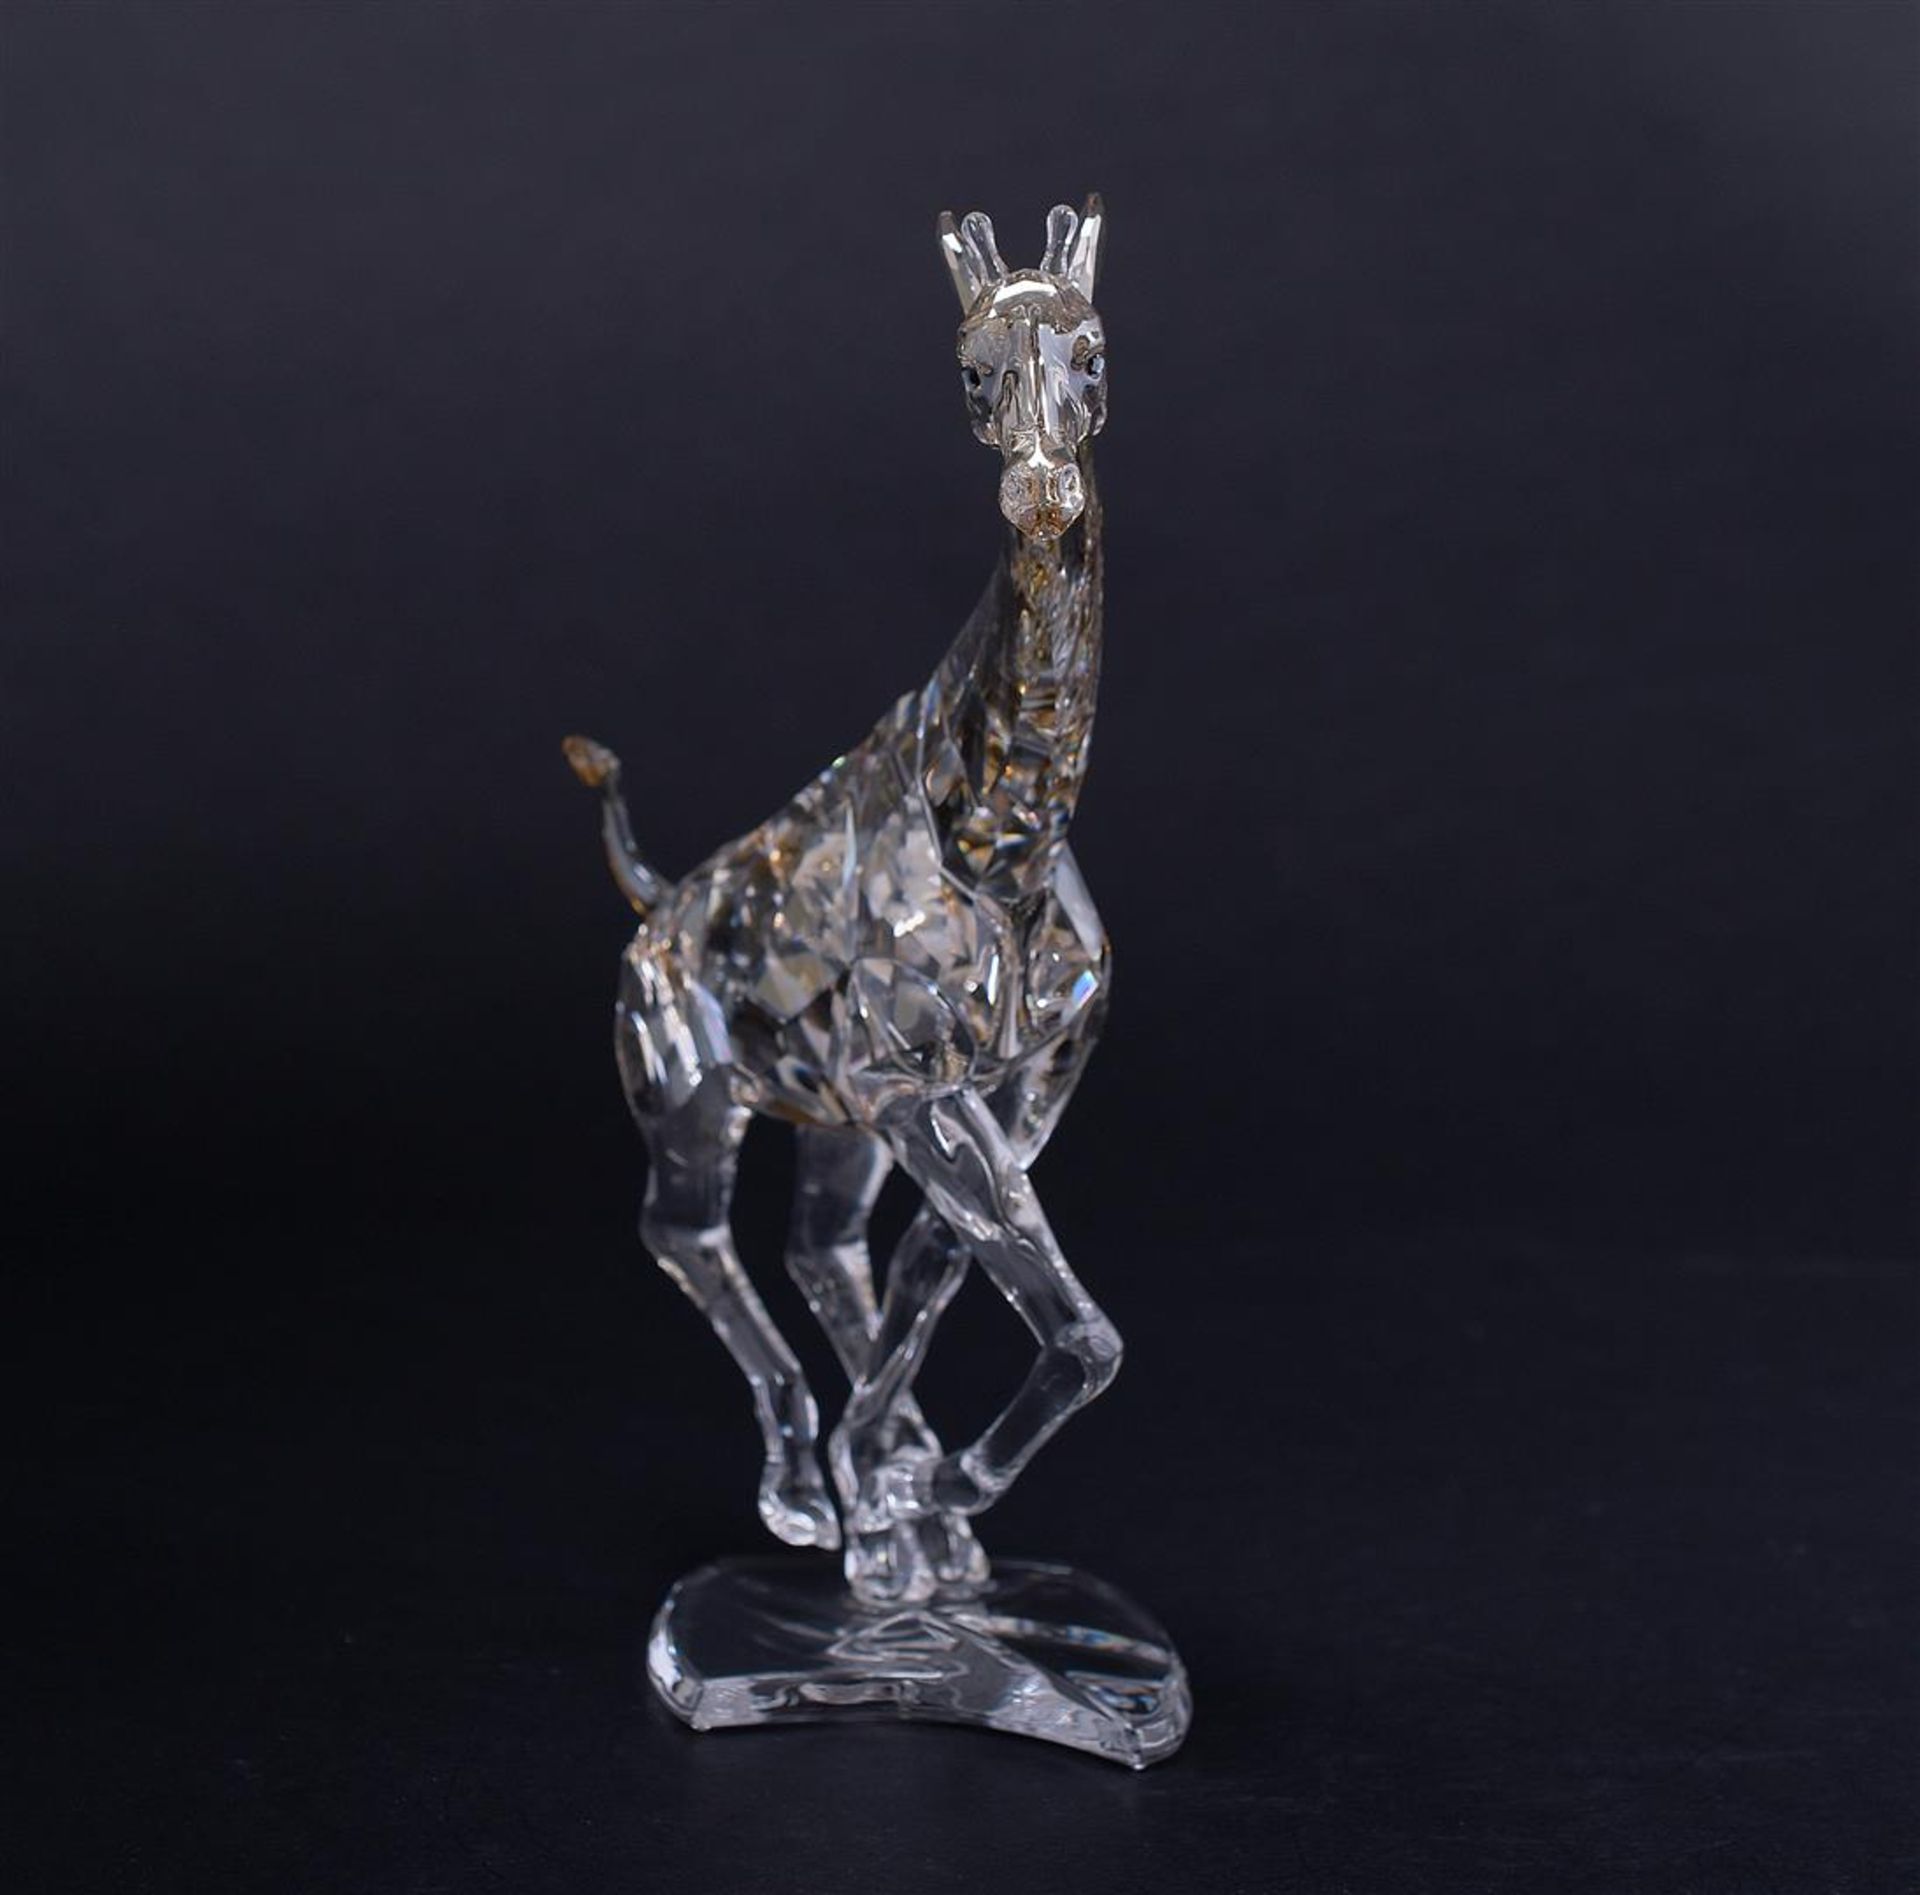 Swarovski, Giraffe, Year of Release 2012, 935896. Includes original box.
17 x 12 cm. - Image 7 of 8